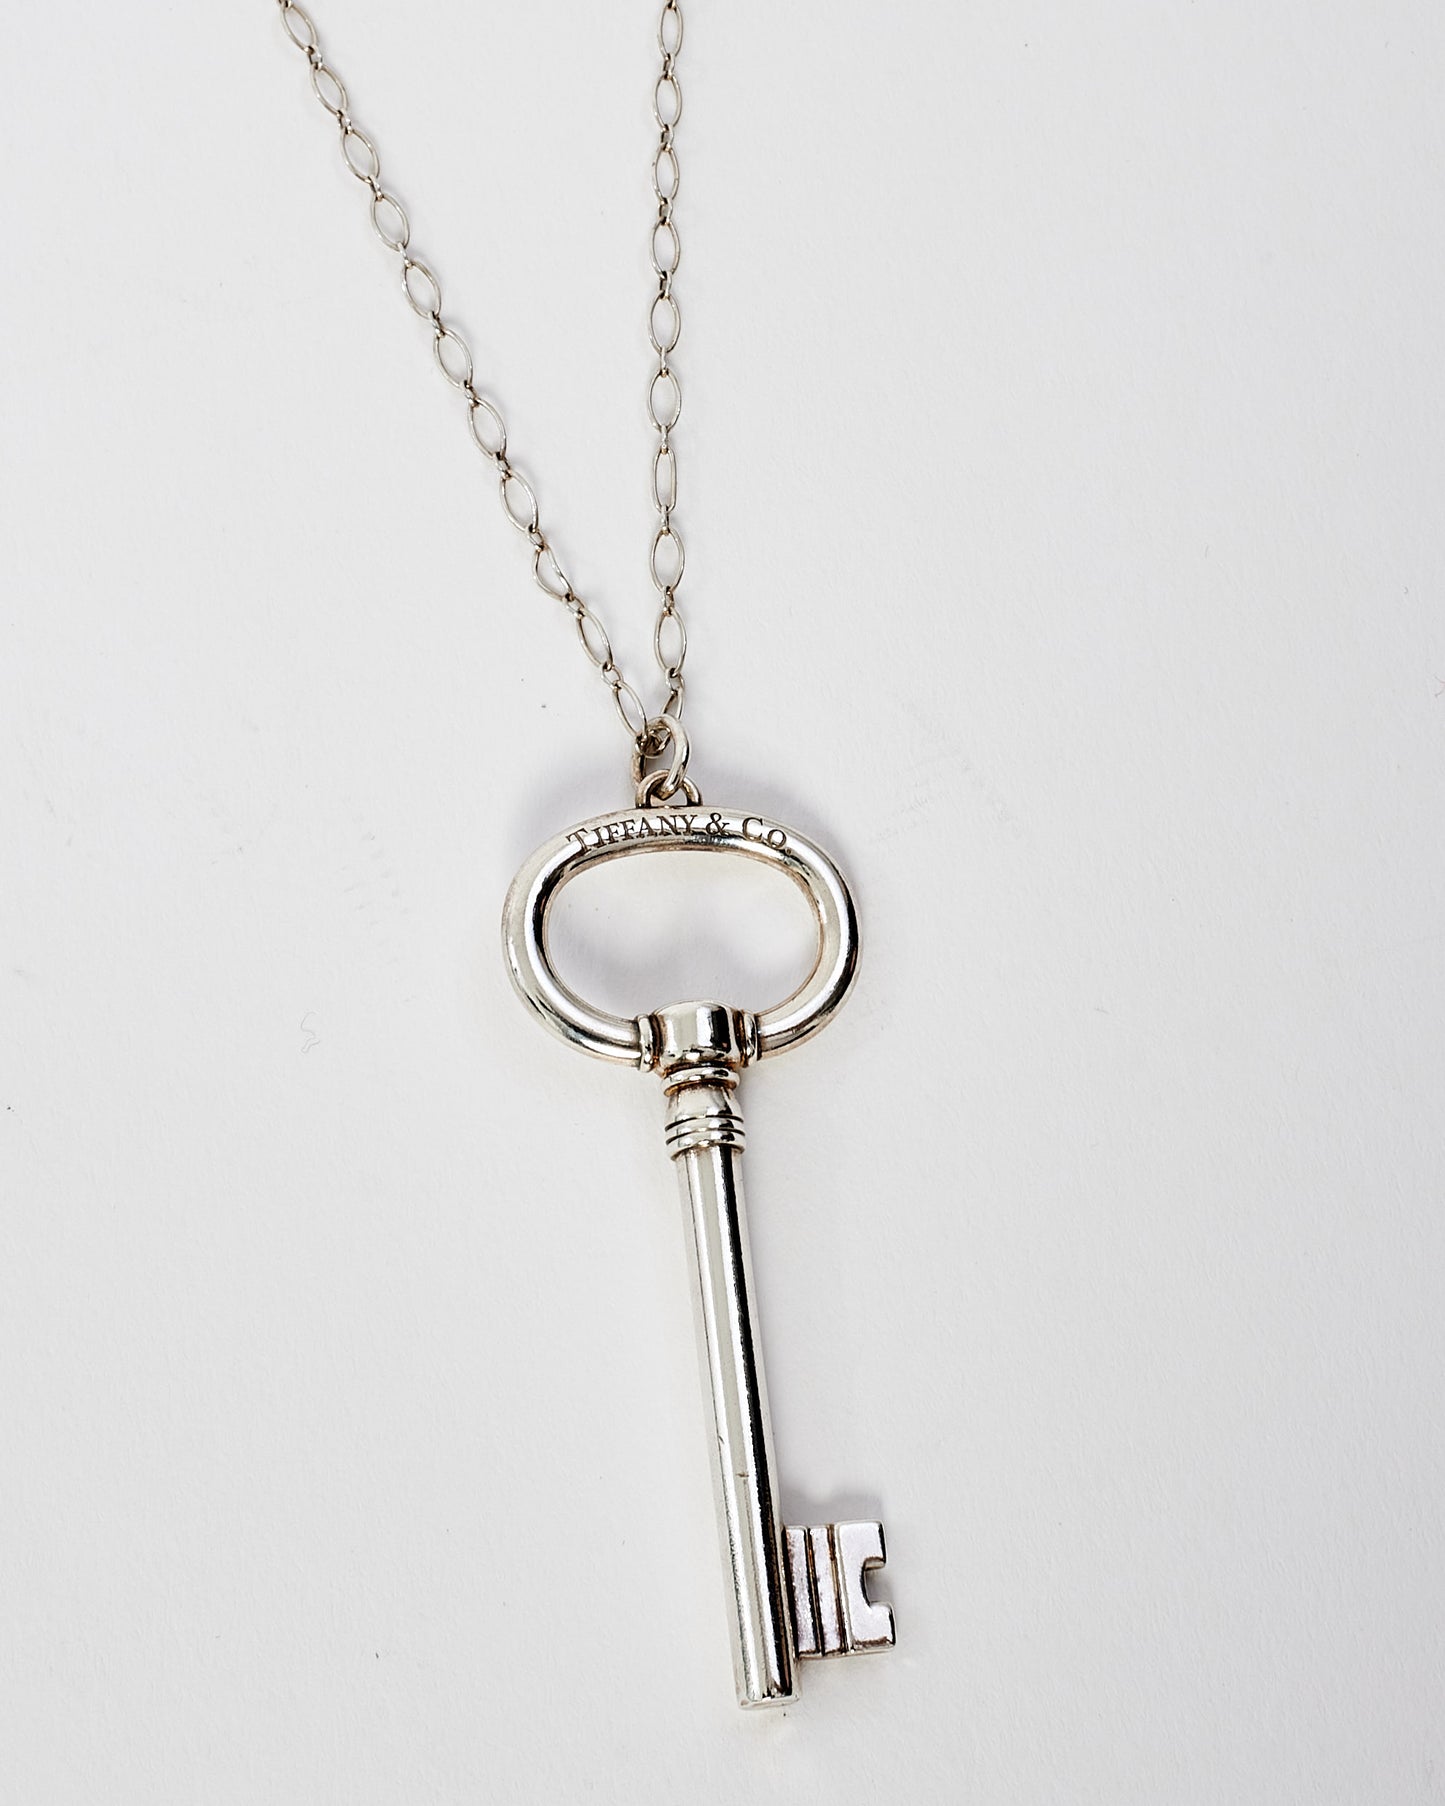 Tiffany & Co. Silver Oval Key Pendant Necklace